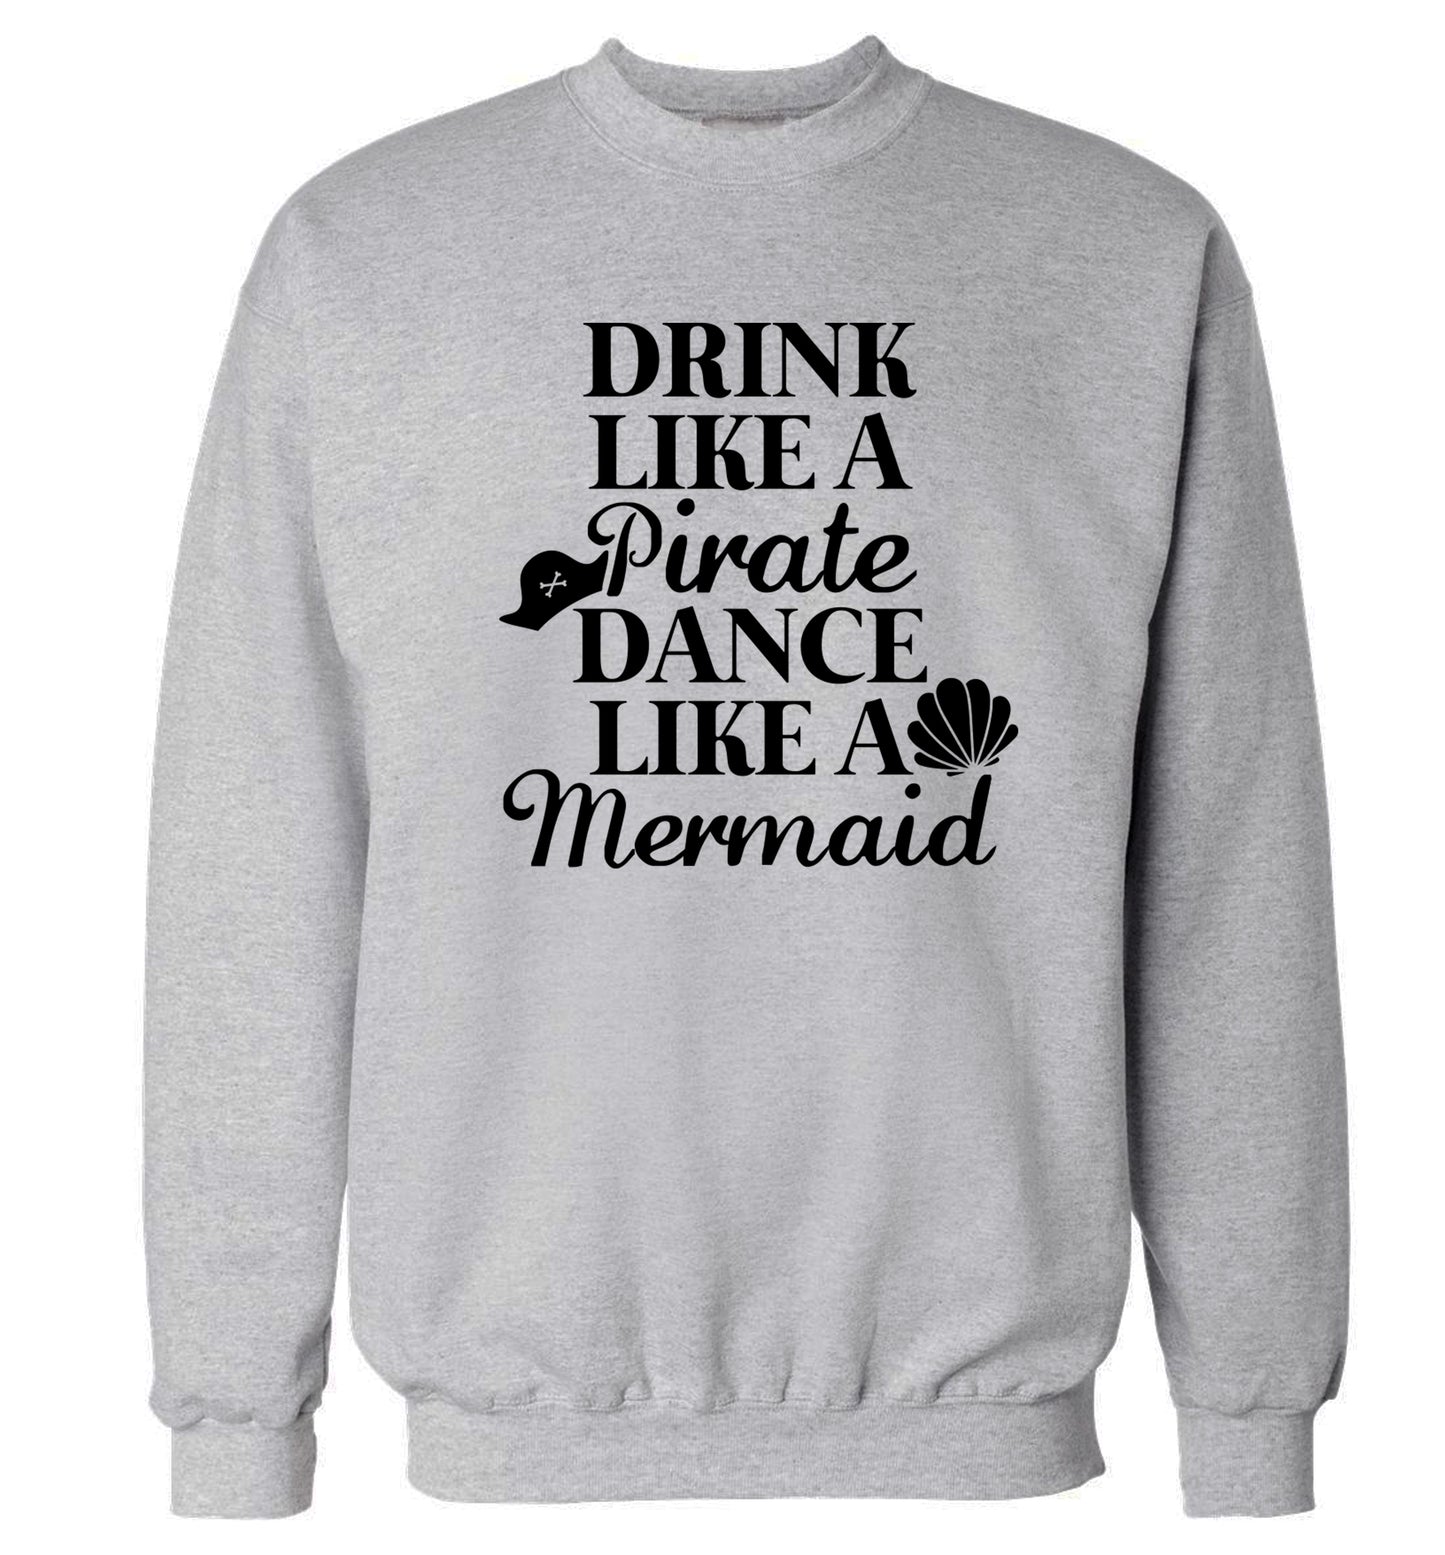 Drink like a pirate dance like a mermaid Adult's unisex grey Sweater 2XL